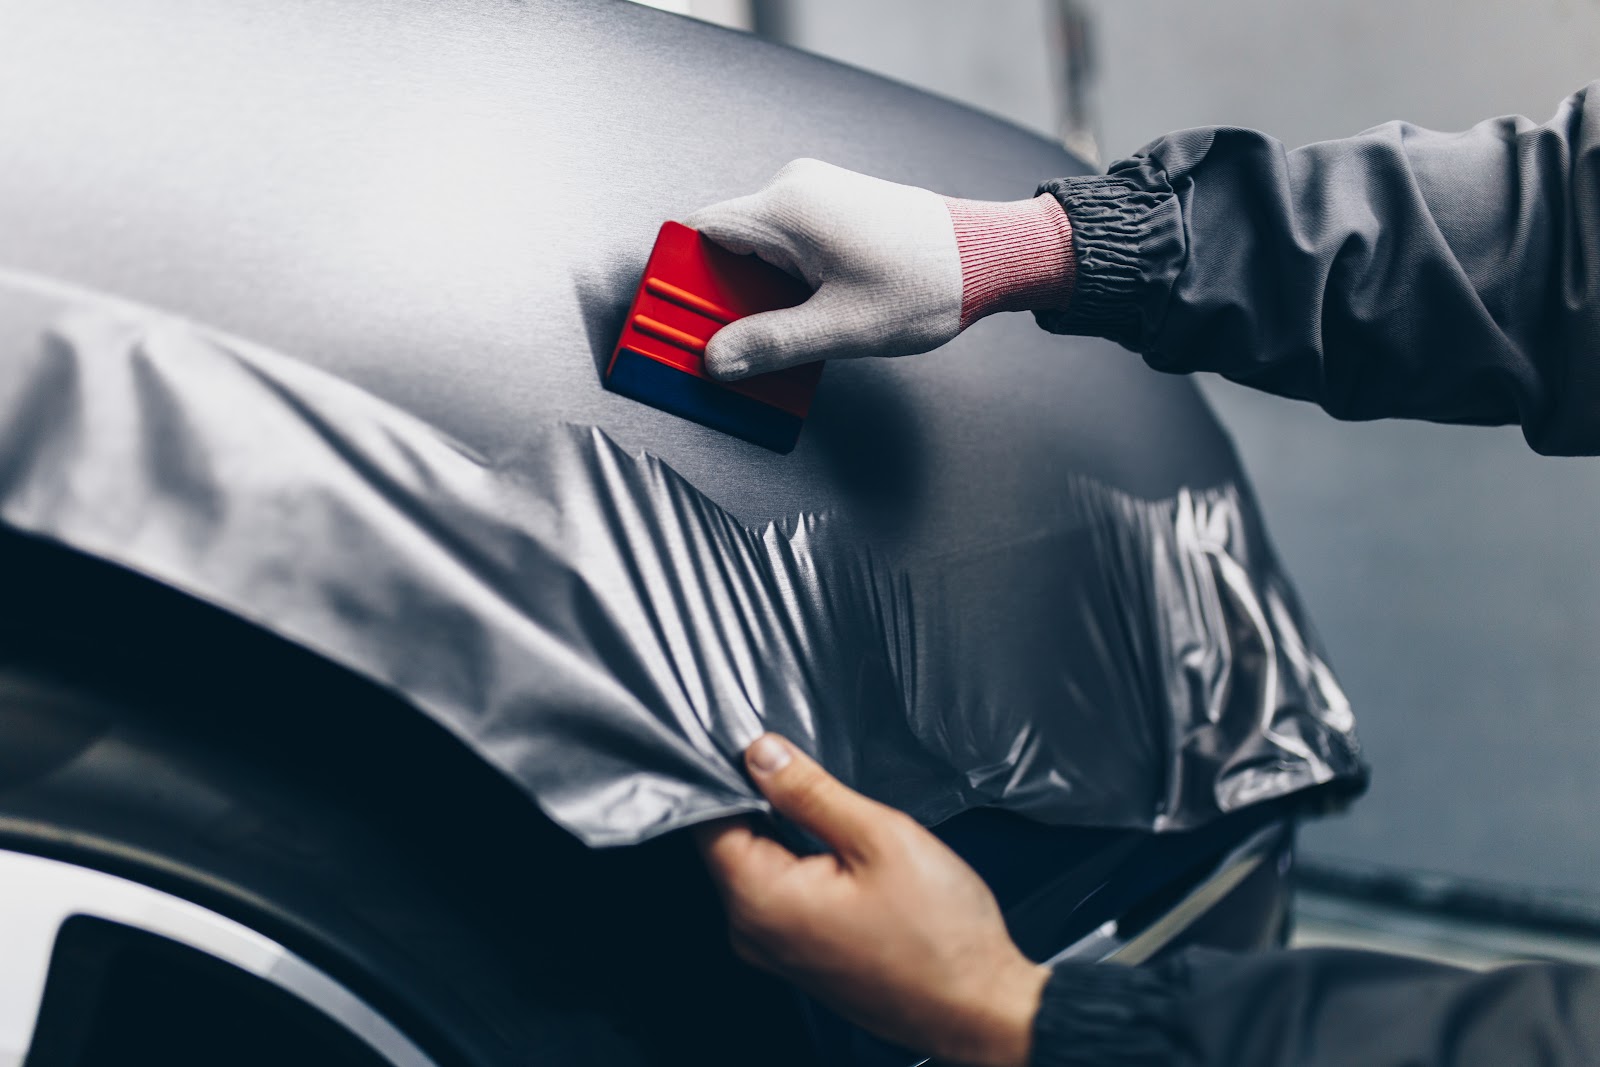 car maintenance tips, car maintenance, teflon coating vs ceramic coating : advantages and disadvantages explained